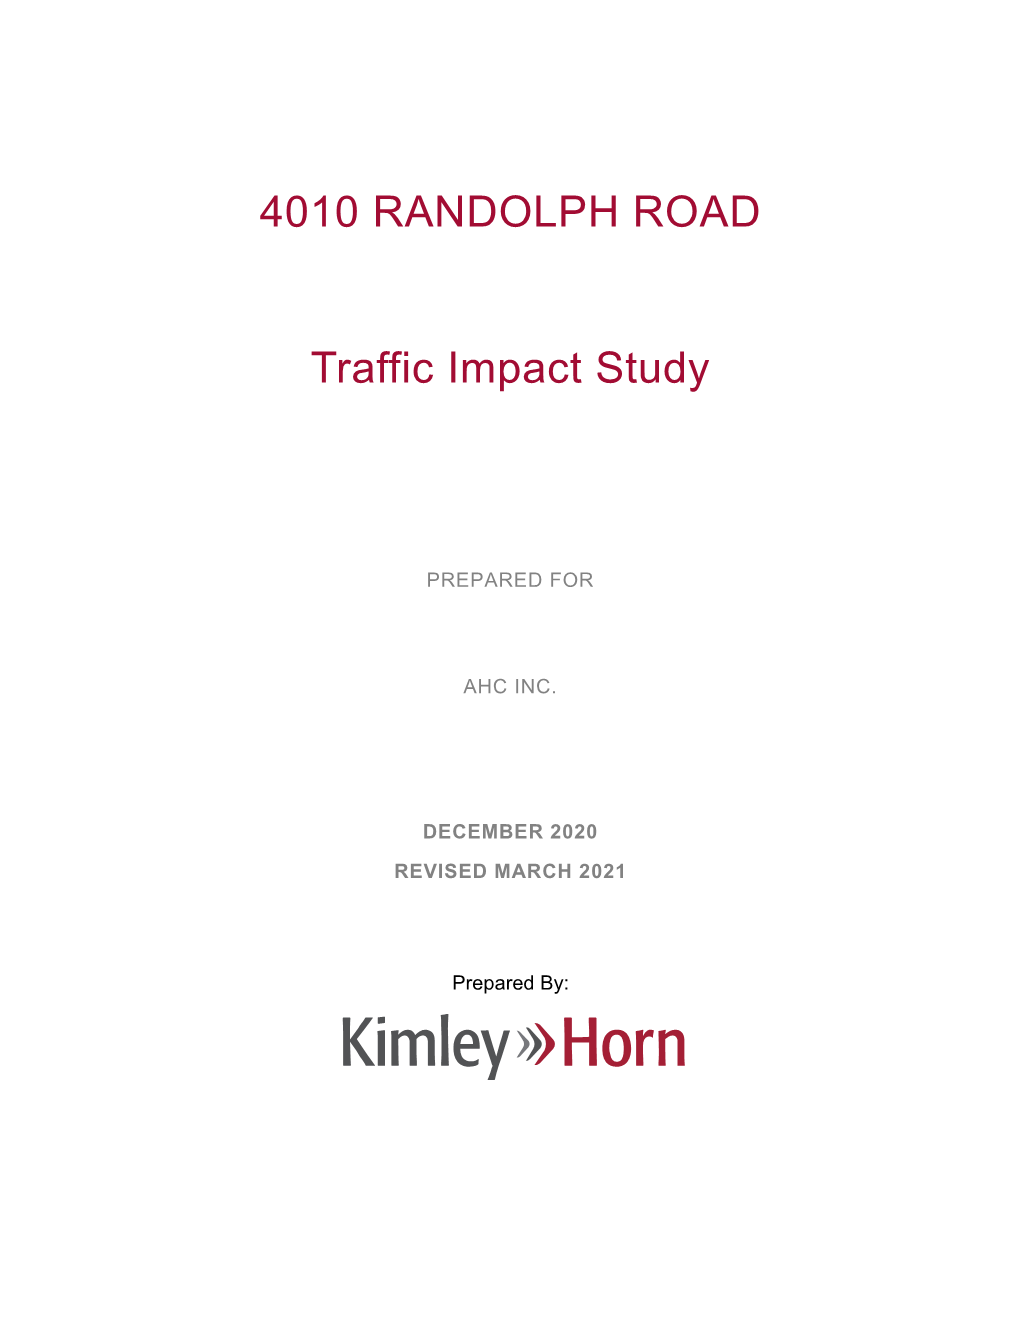 4010 RANDOLPH ROAD Traffic Impact Study